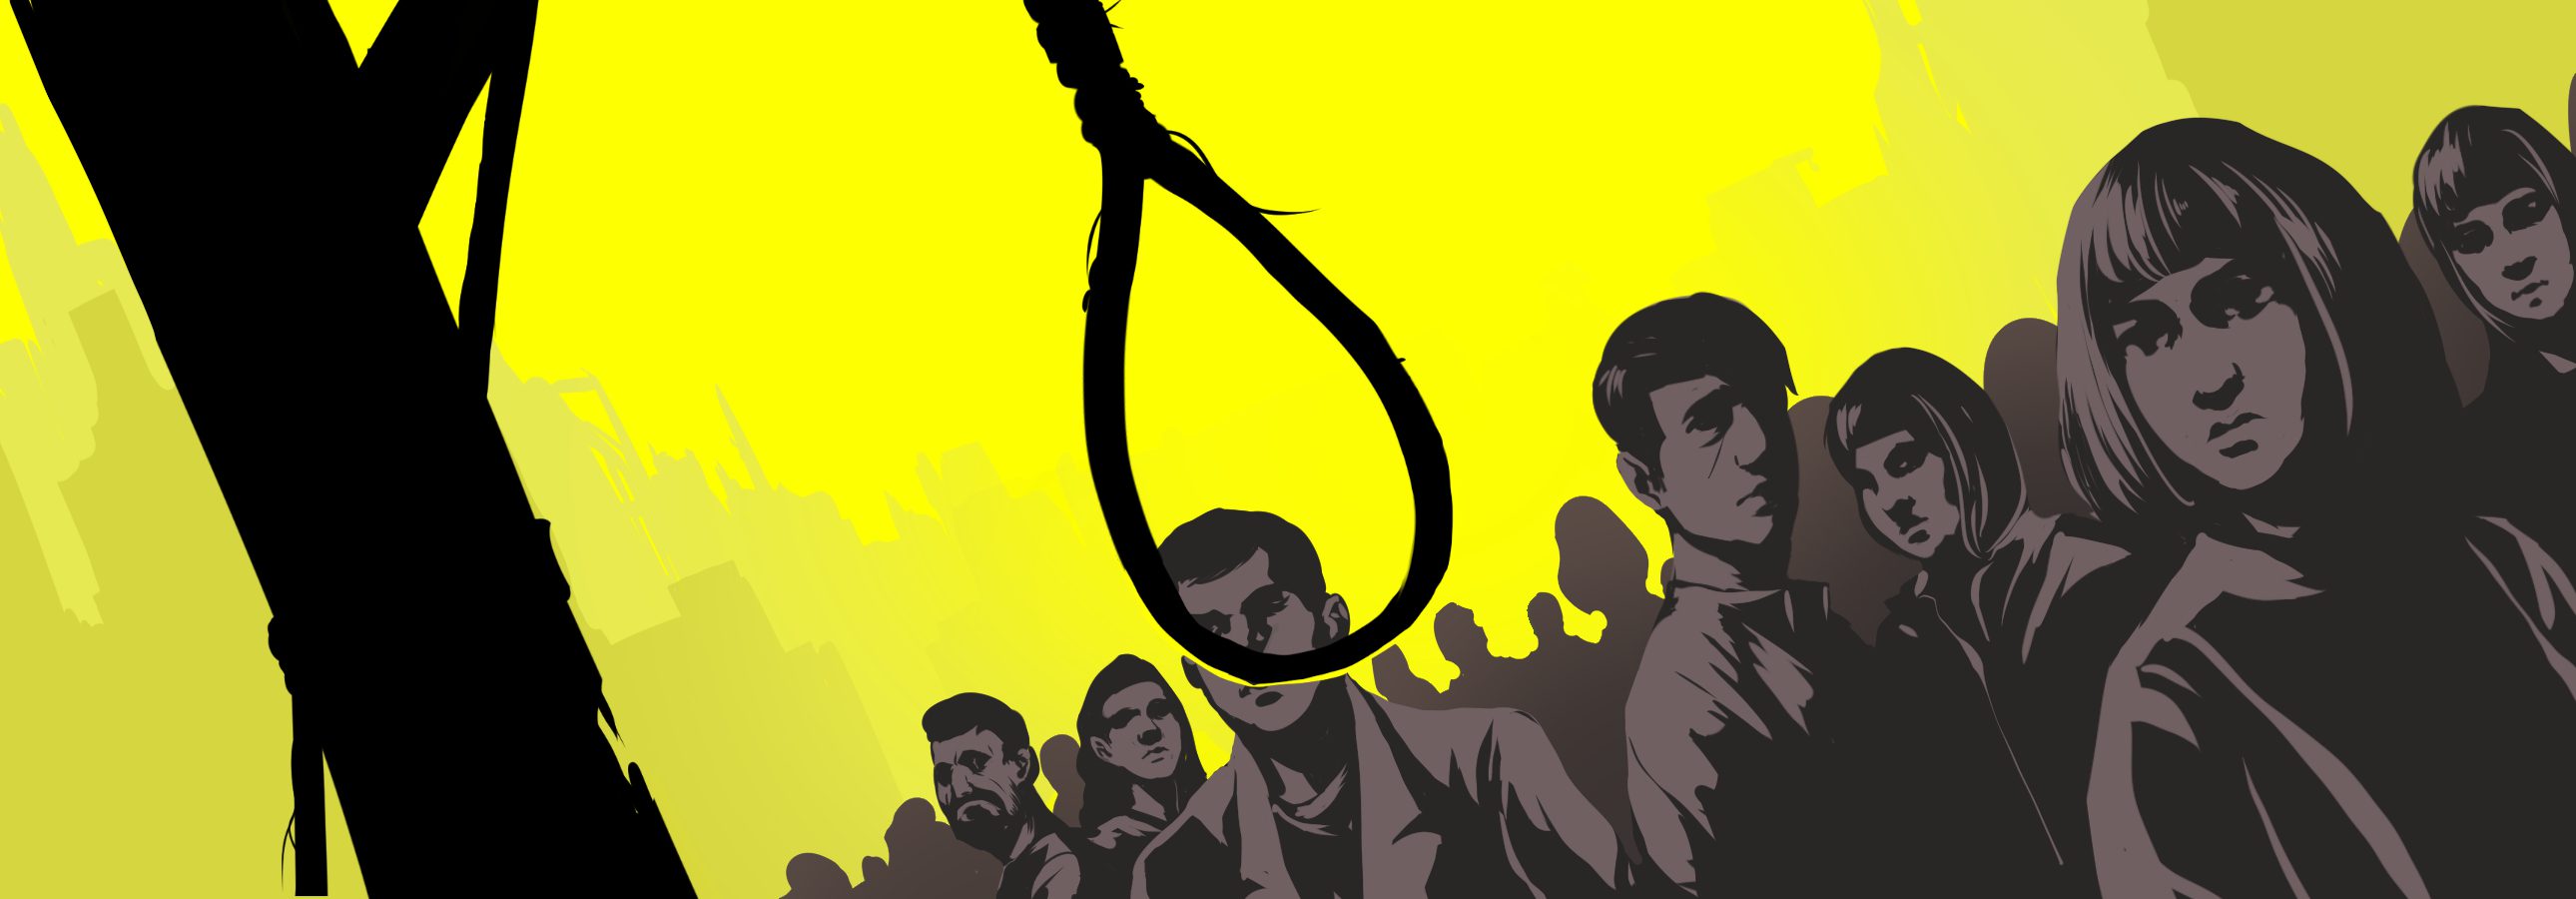 death penalty hanging noose